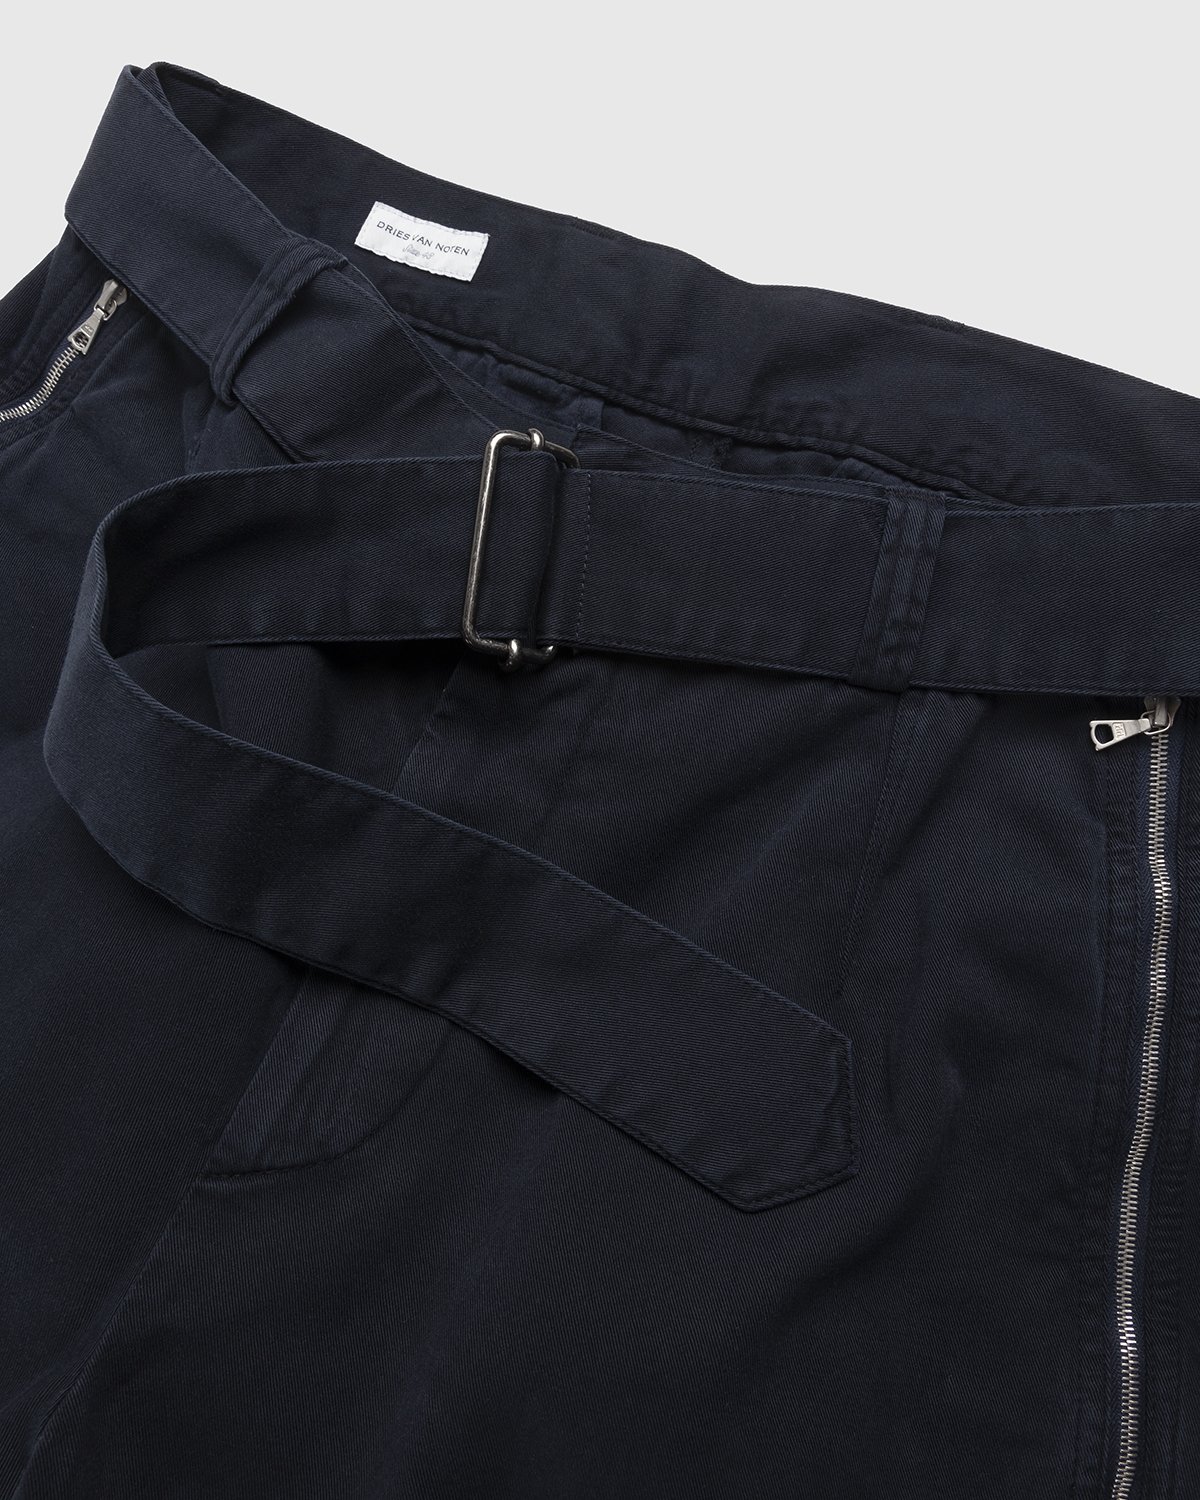 Dries van Noten - Penson Pants Navy - Clothing - Blue - Image 4